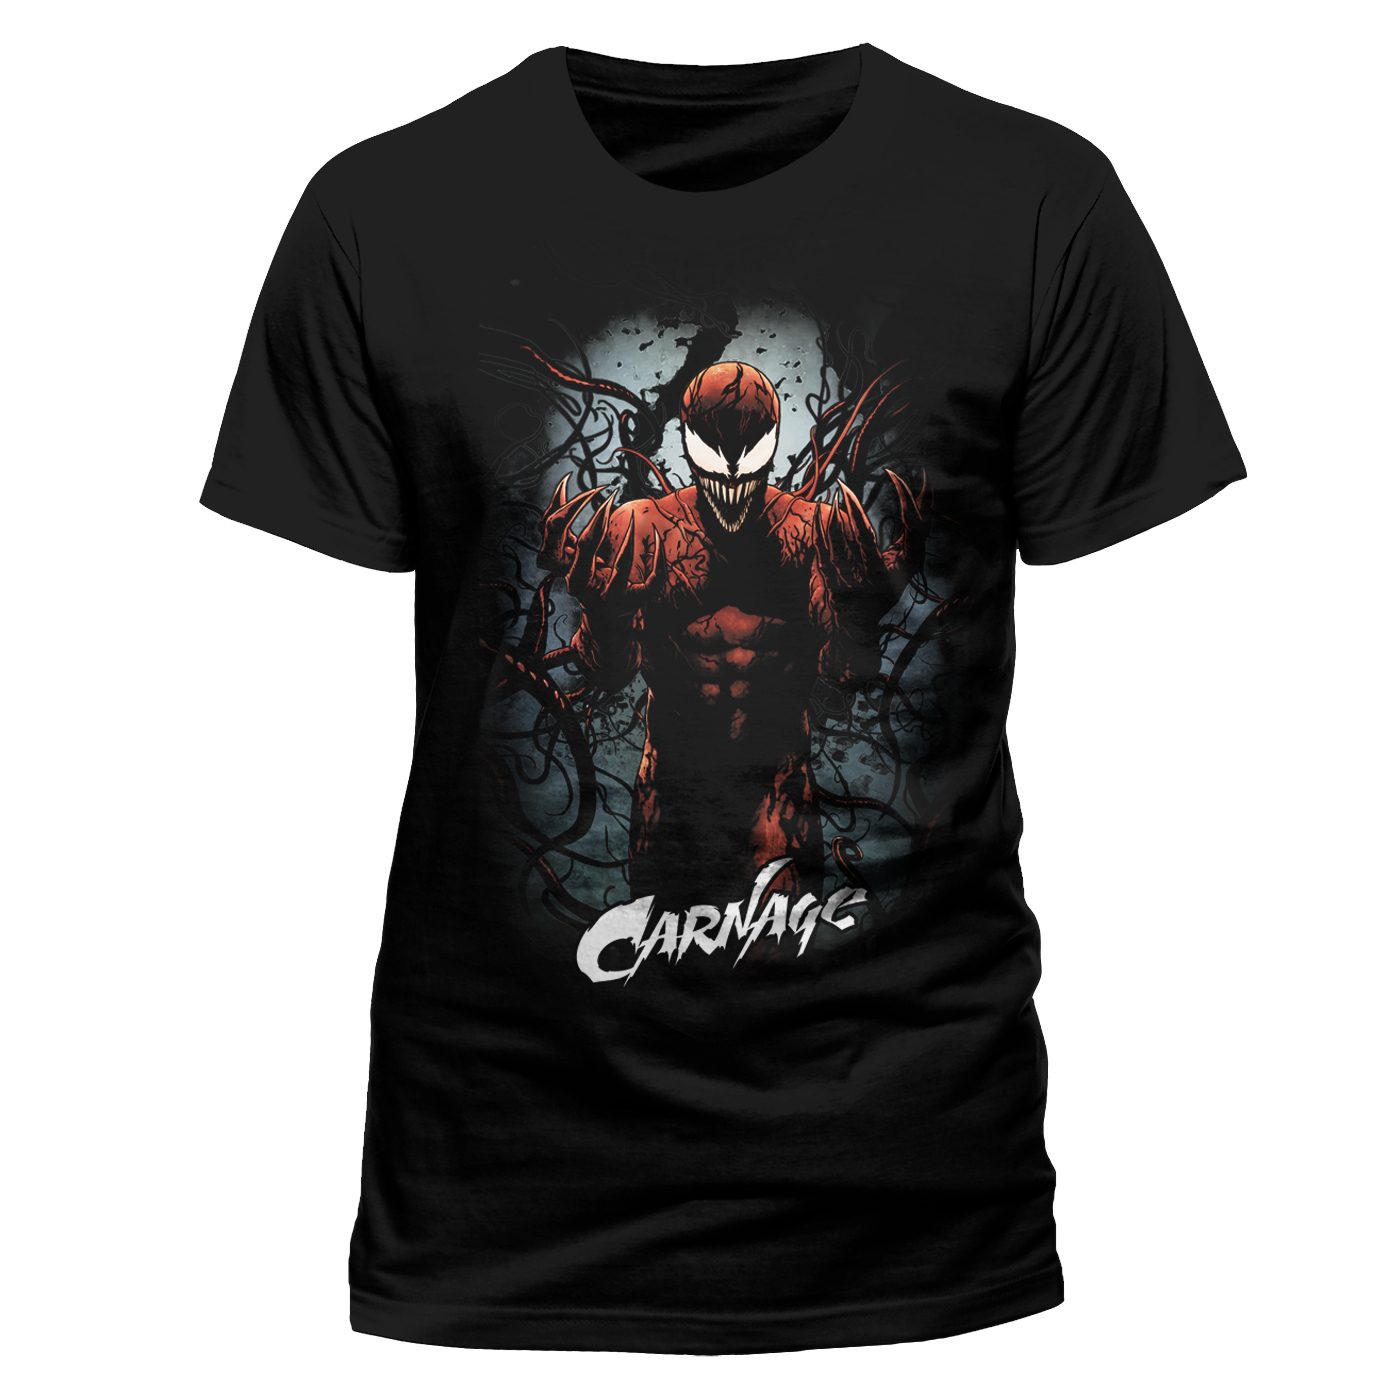 Carnage Character T-shirt